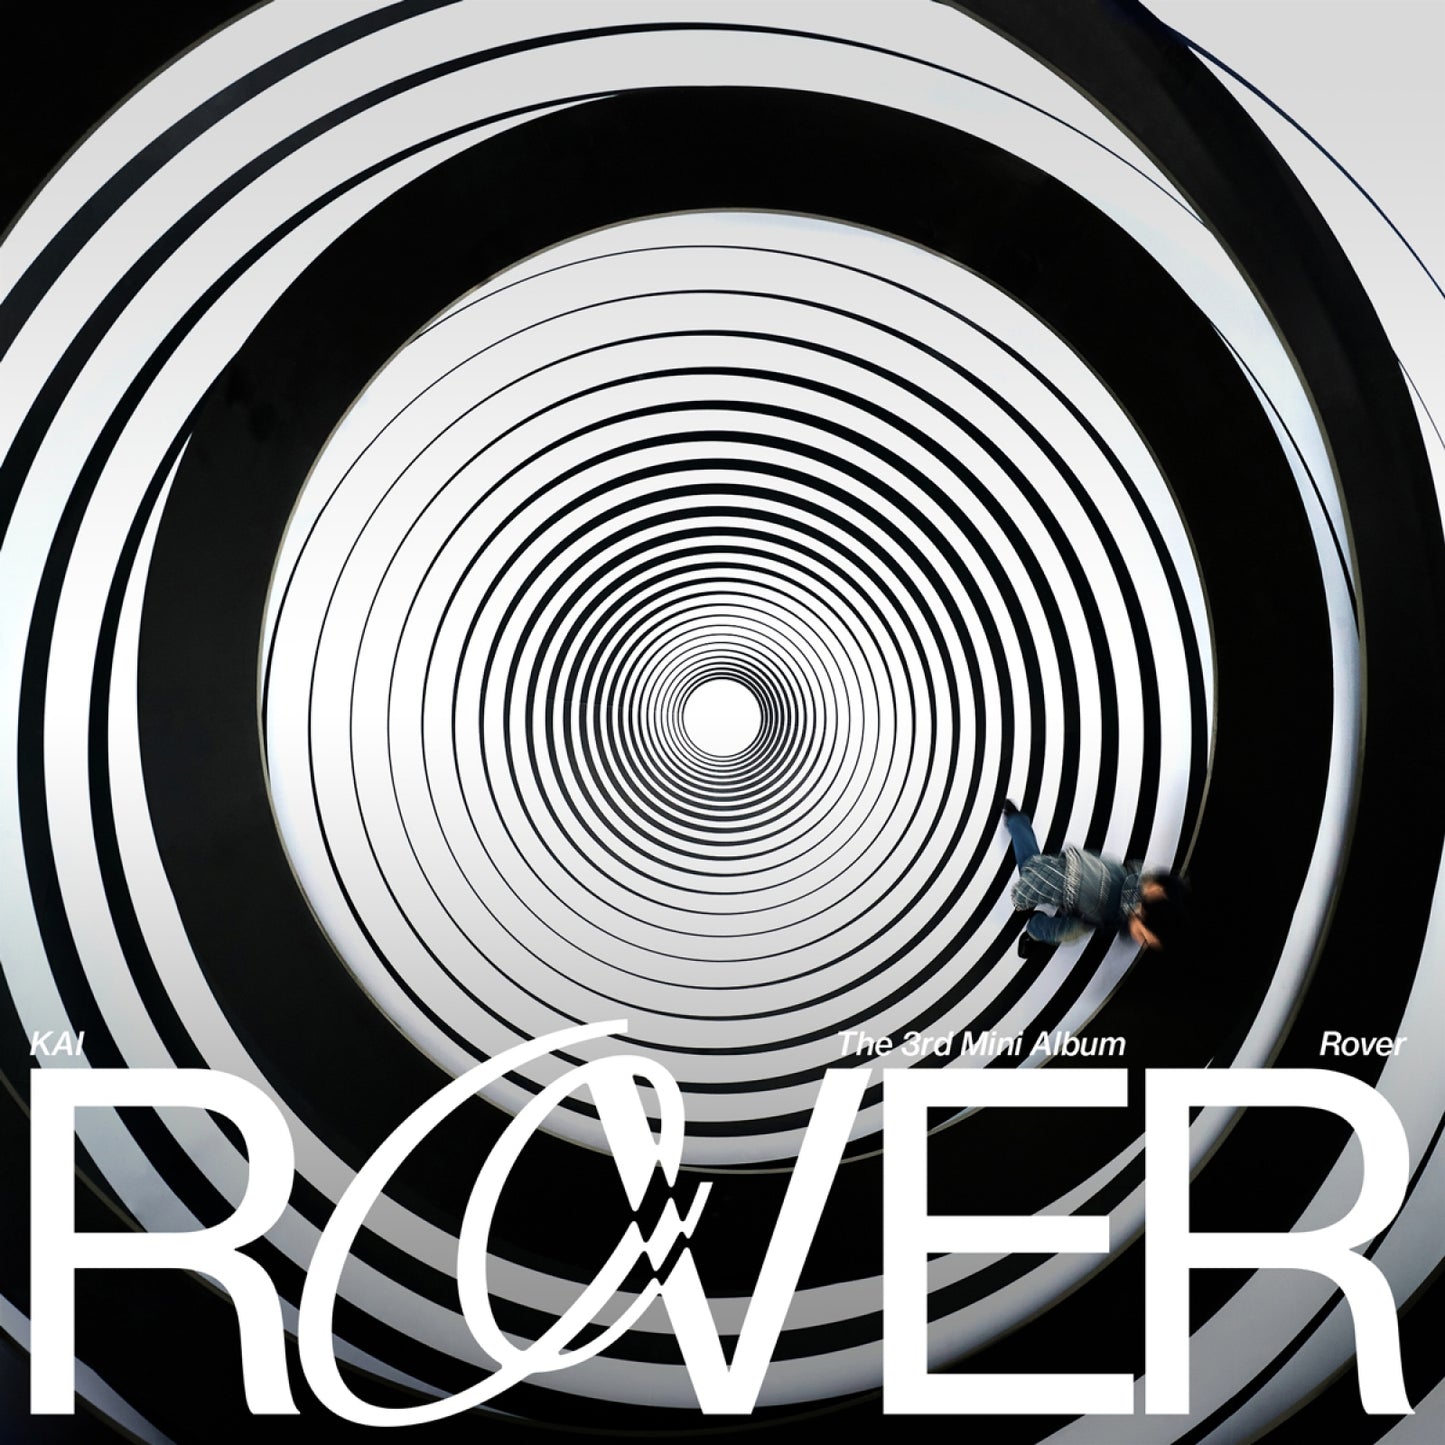 EXO | KAI - The 3rd Mini Album | ROVER (Digipack ver.)